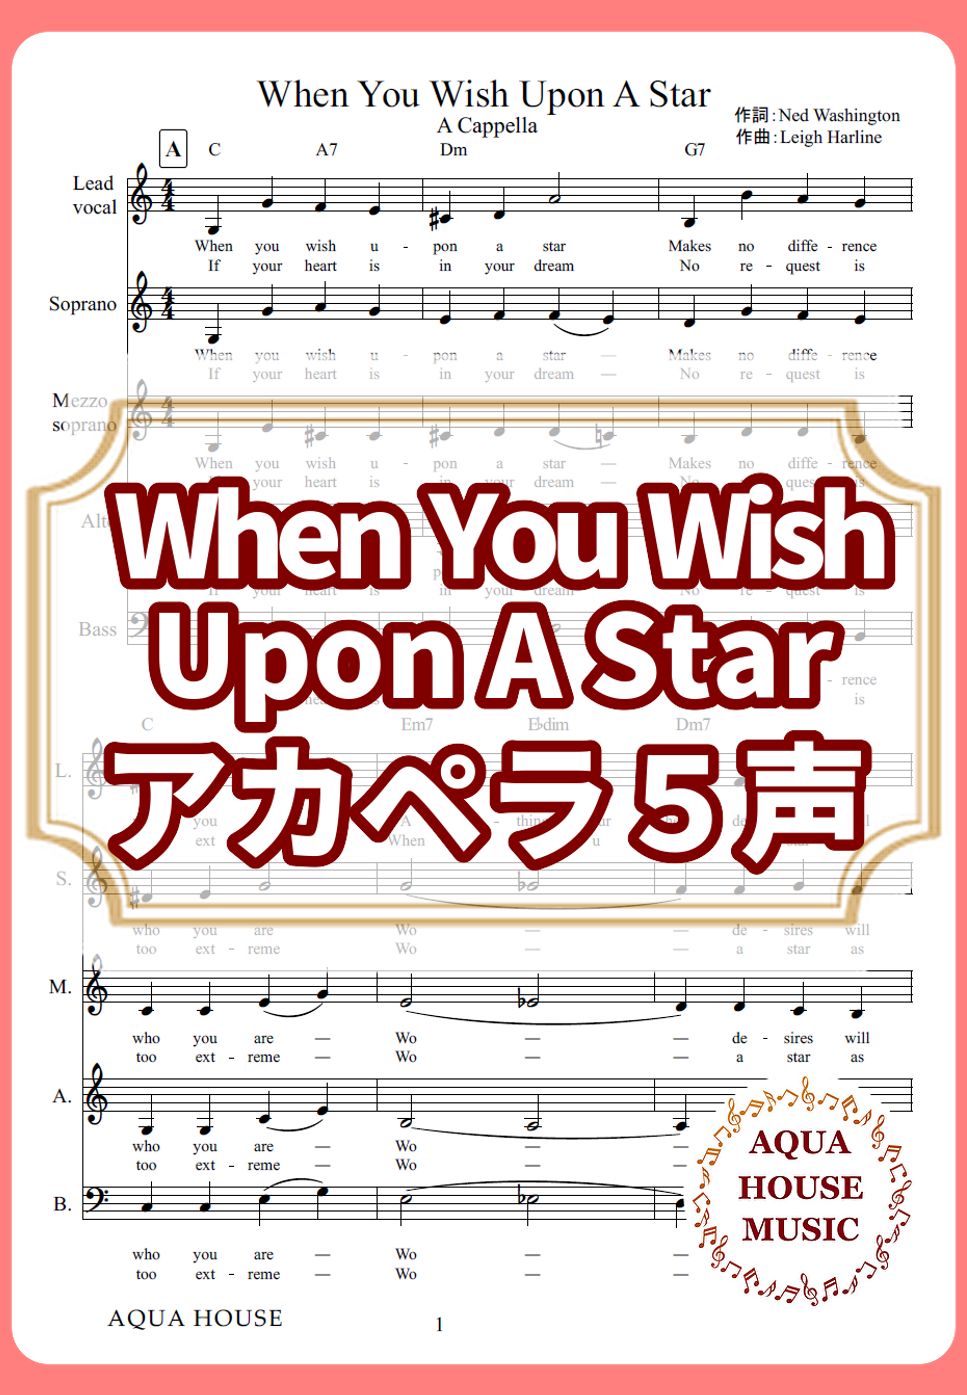 Leigh Harline - When You Wish Upon A Star(星に願いを) (アカペラ楽譜♪5声ボイパなし) by 飯田 亜紗子